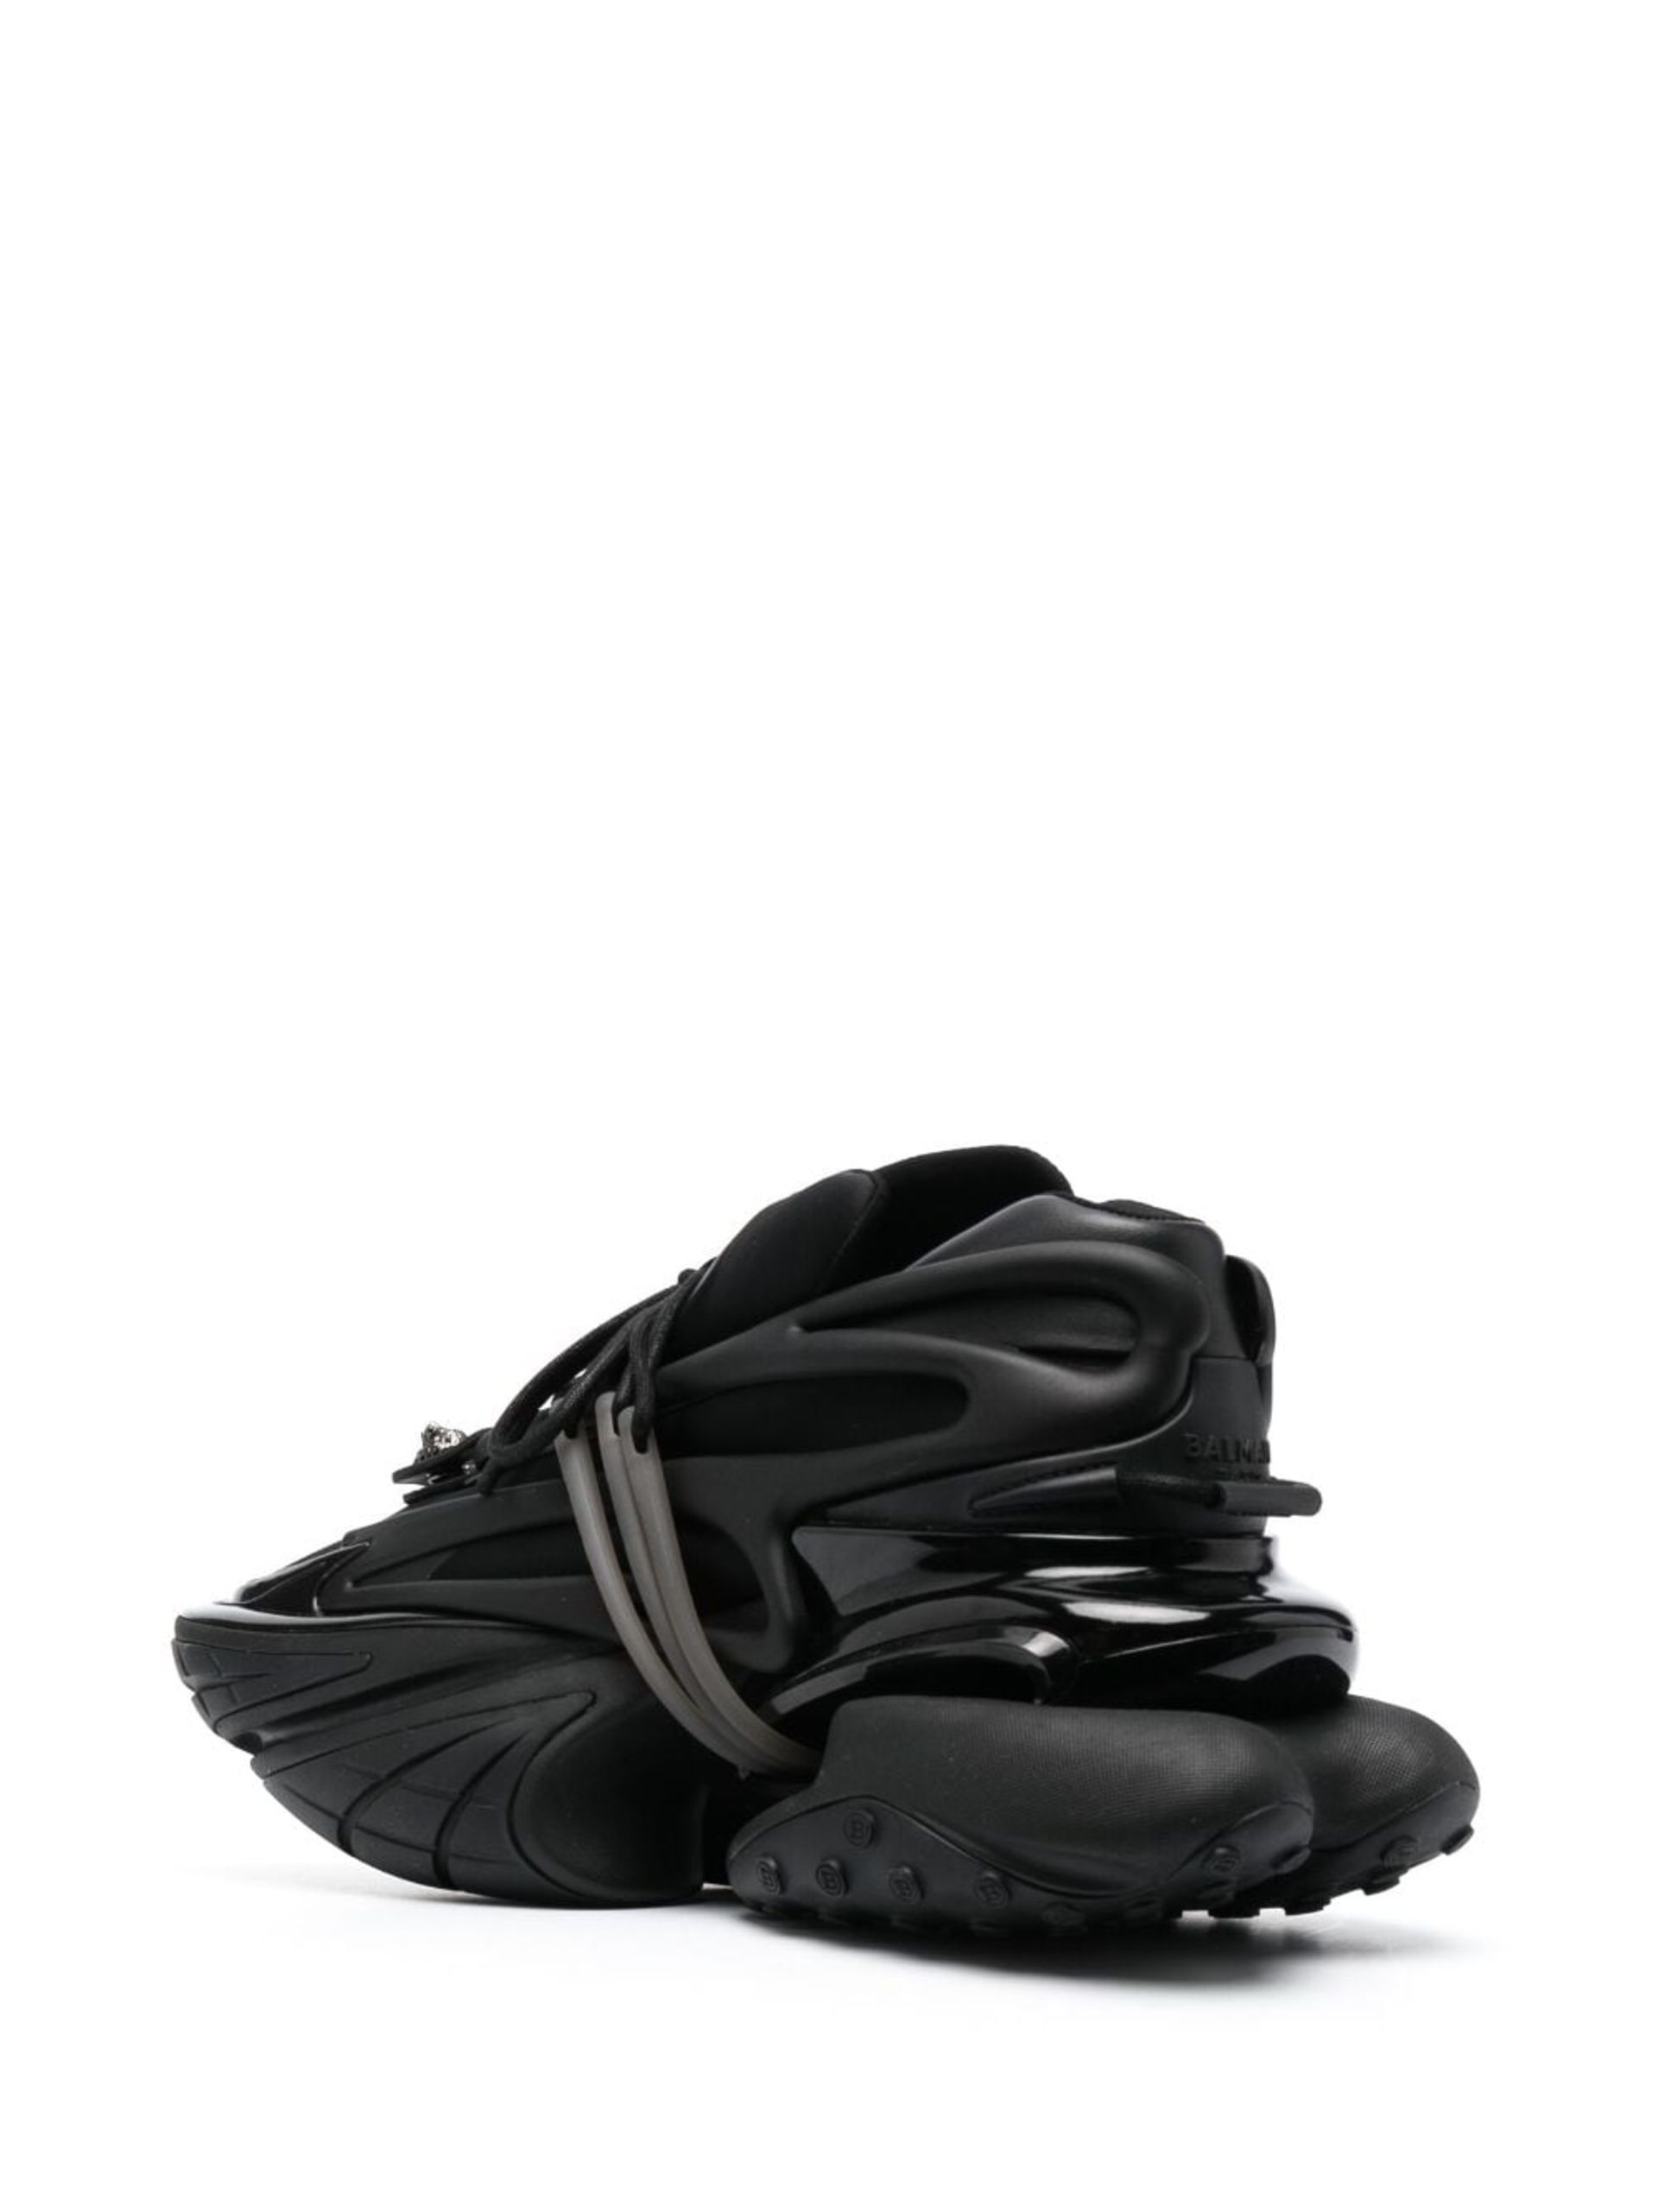 Black Unicorn Leather Sneakers - 3